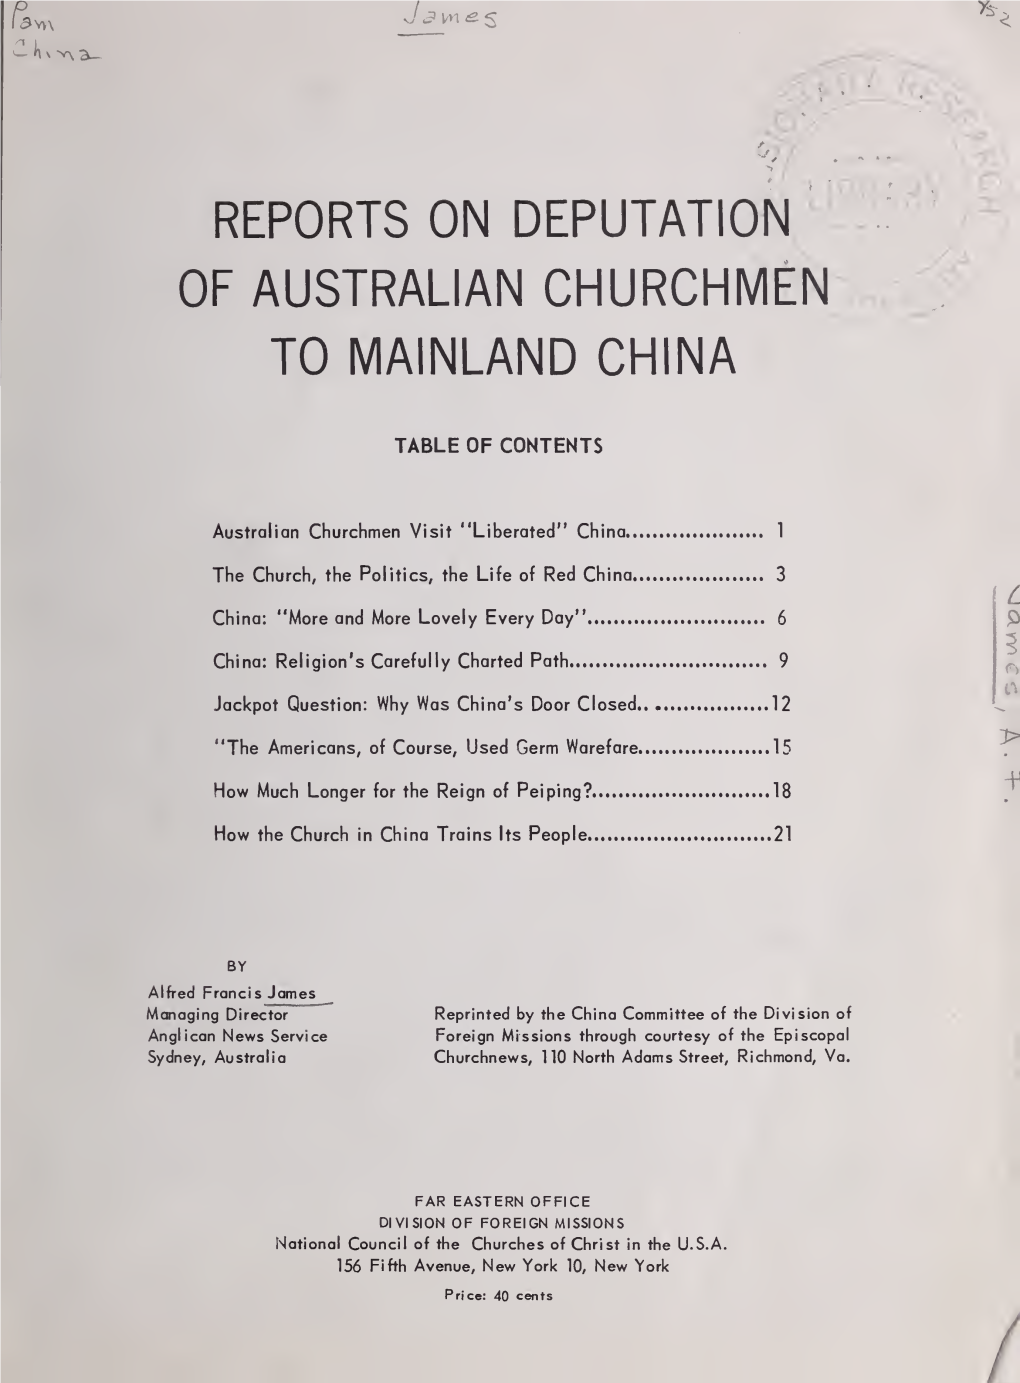 Reports on Deputation of Australian Churchmen to Mainland China